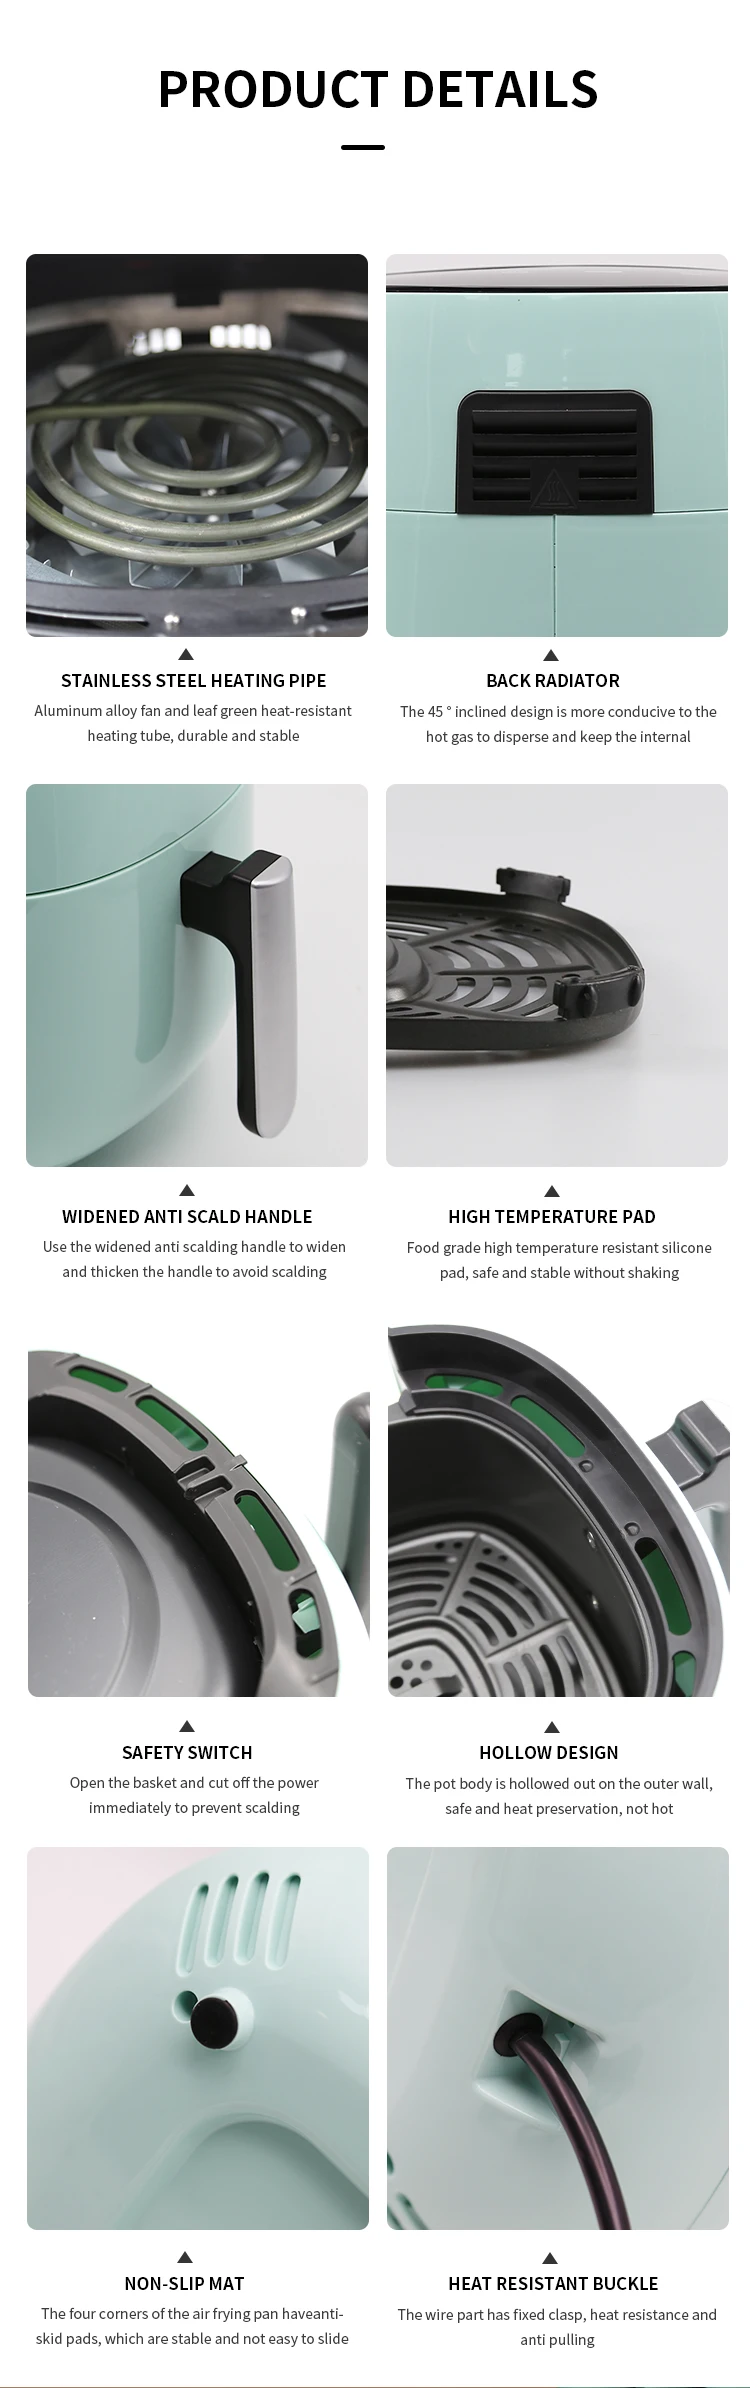 4L Kitchen Appliances Digital NonStick Electric Oilless Healthy Air Fryer